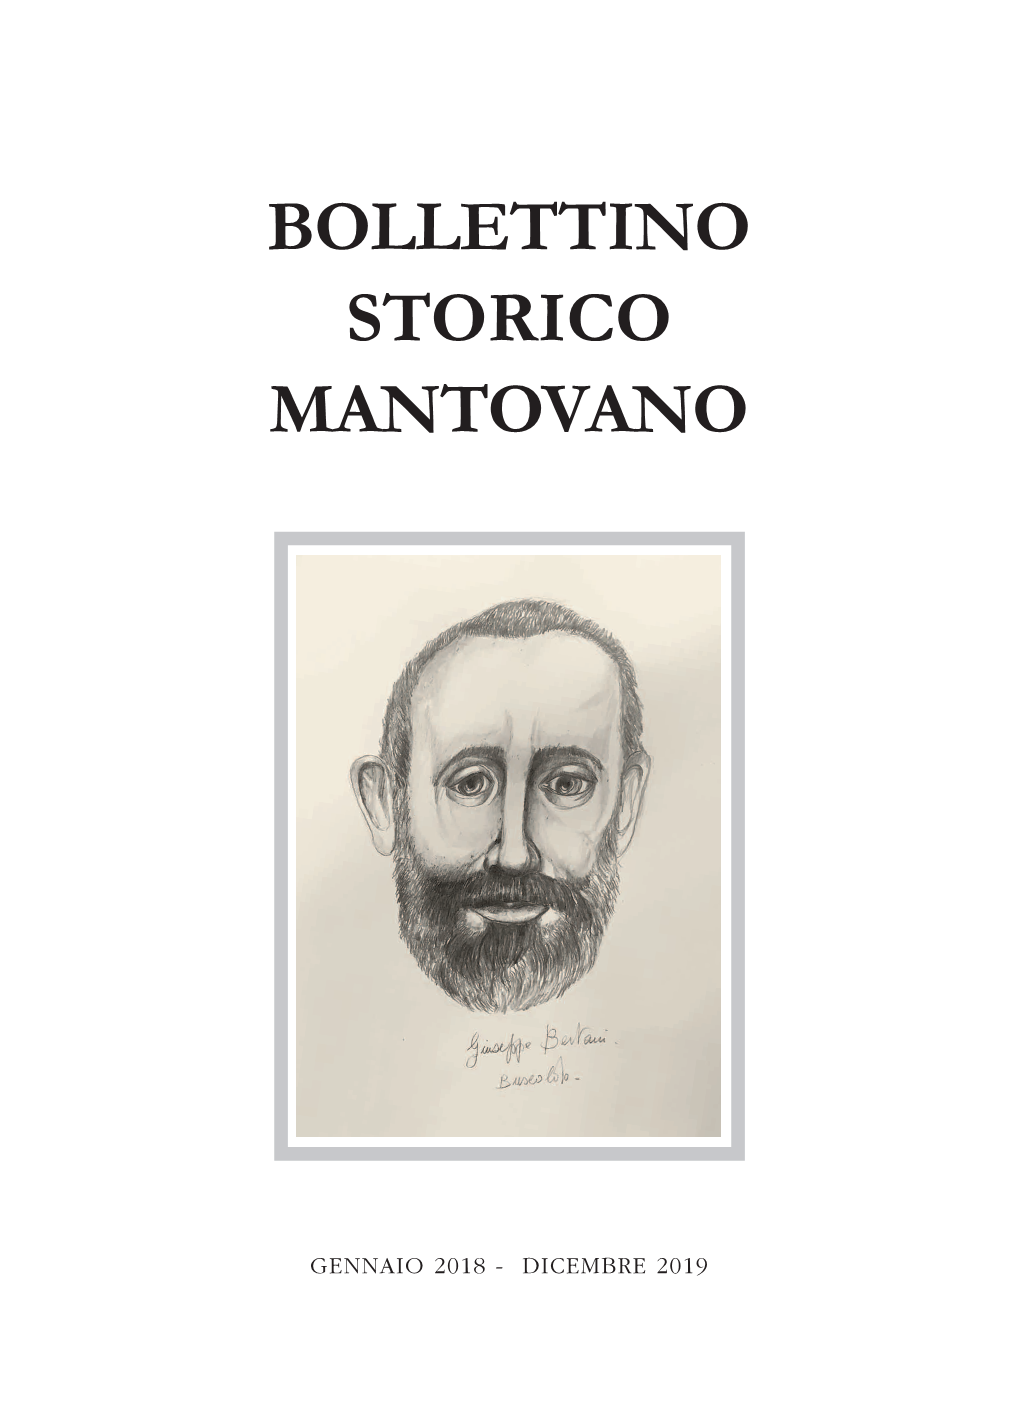 Bollettino Storico Mantovano